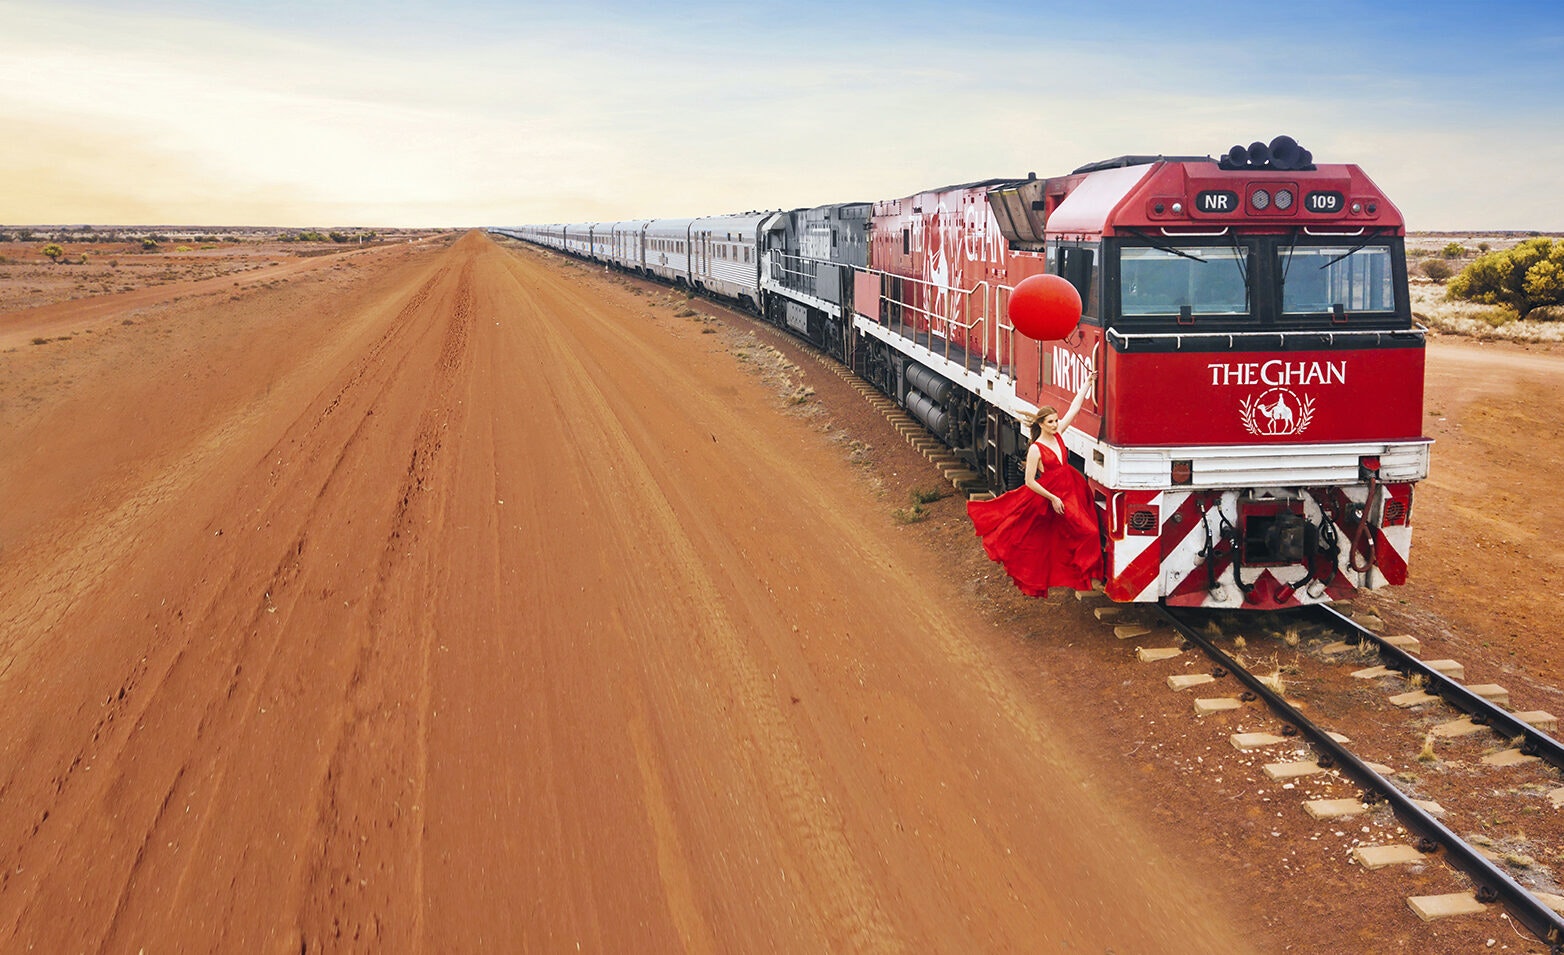 Ghan Train - Journey Through The Australian Outback Like Never Before